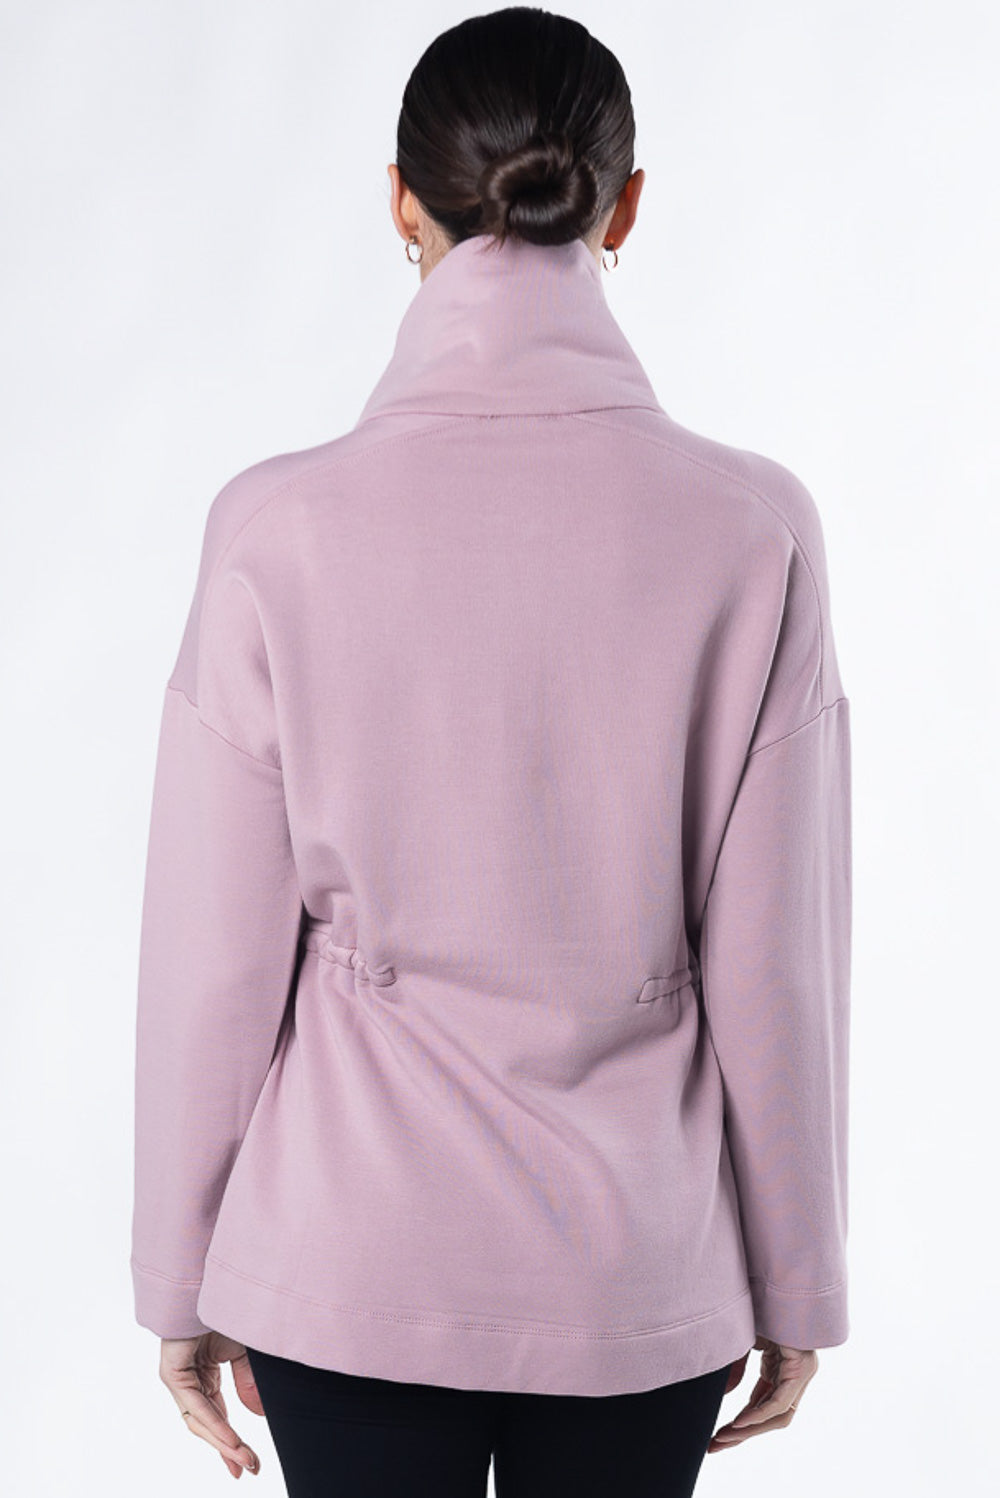 Women's long pullover hoody Camo - HS apparel